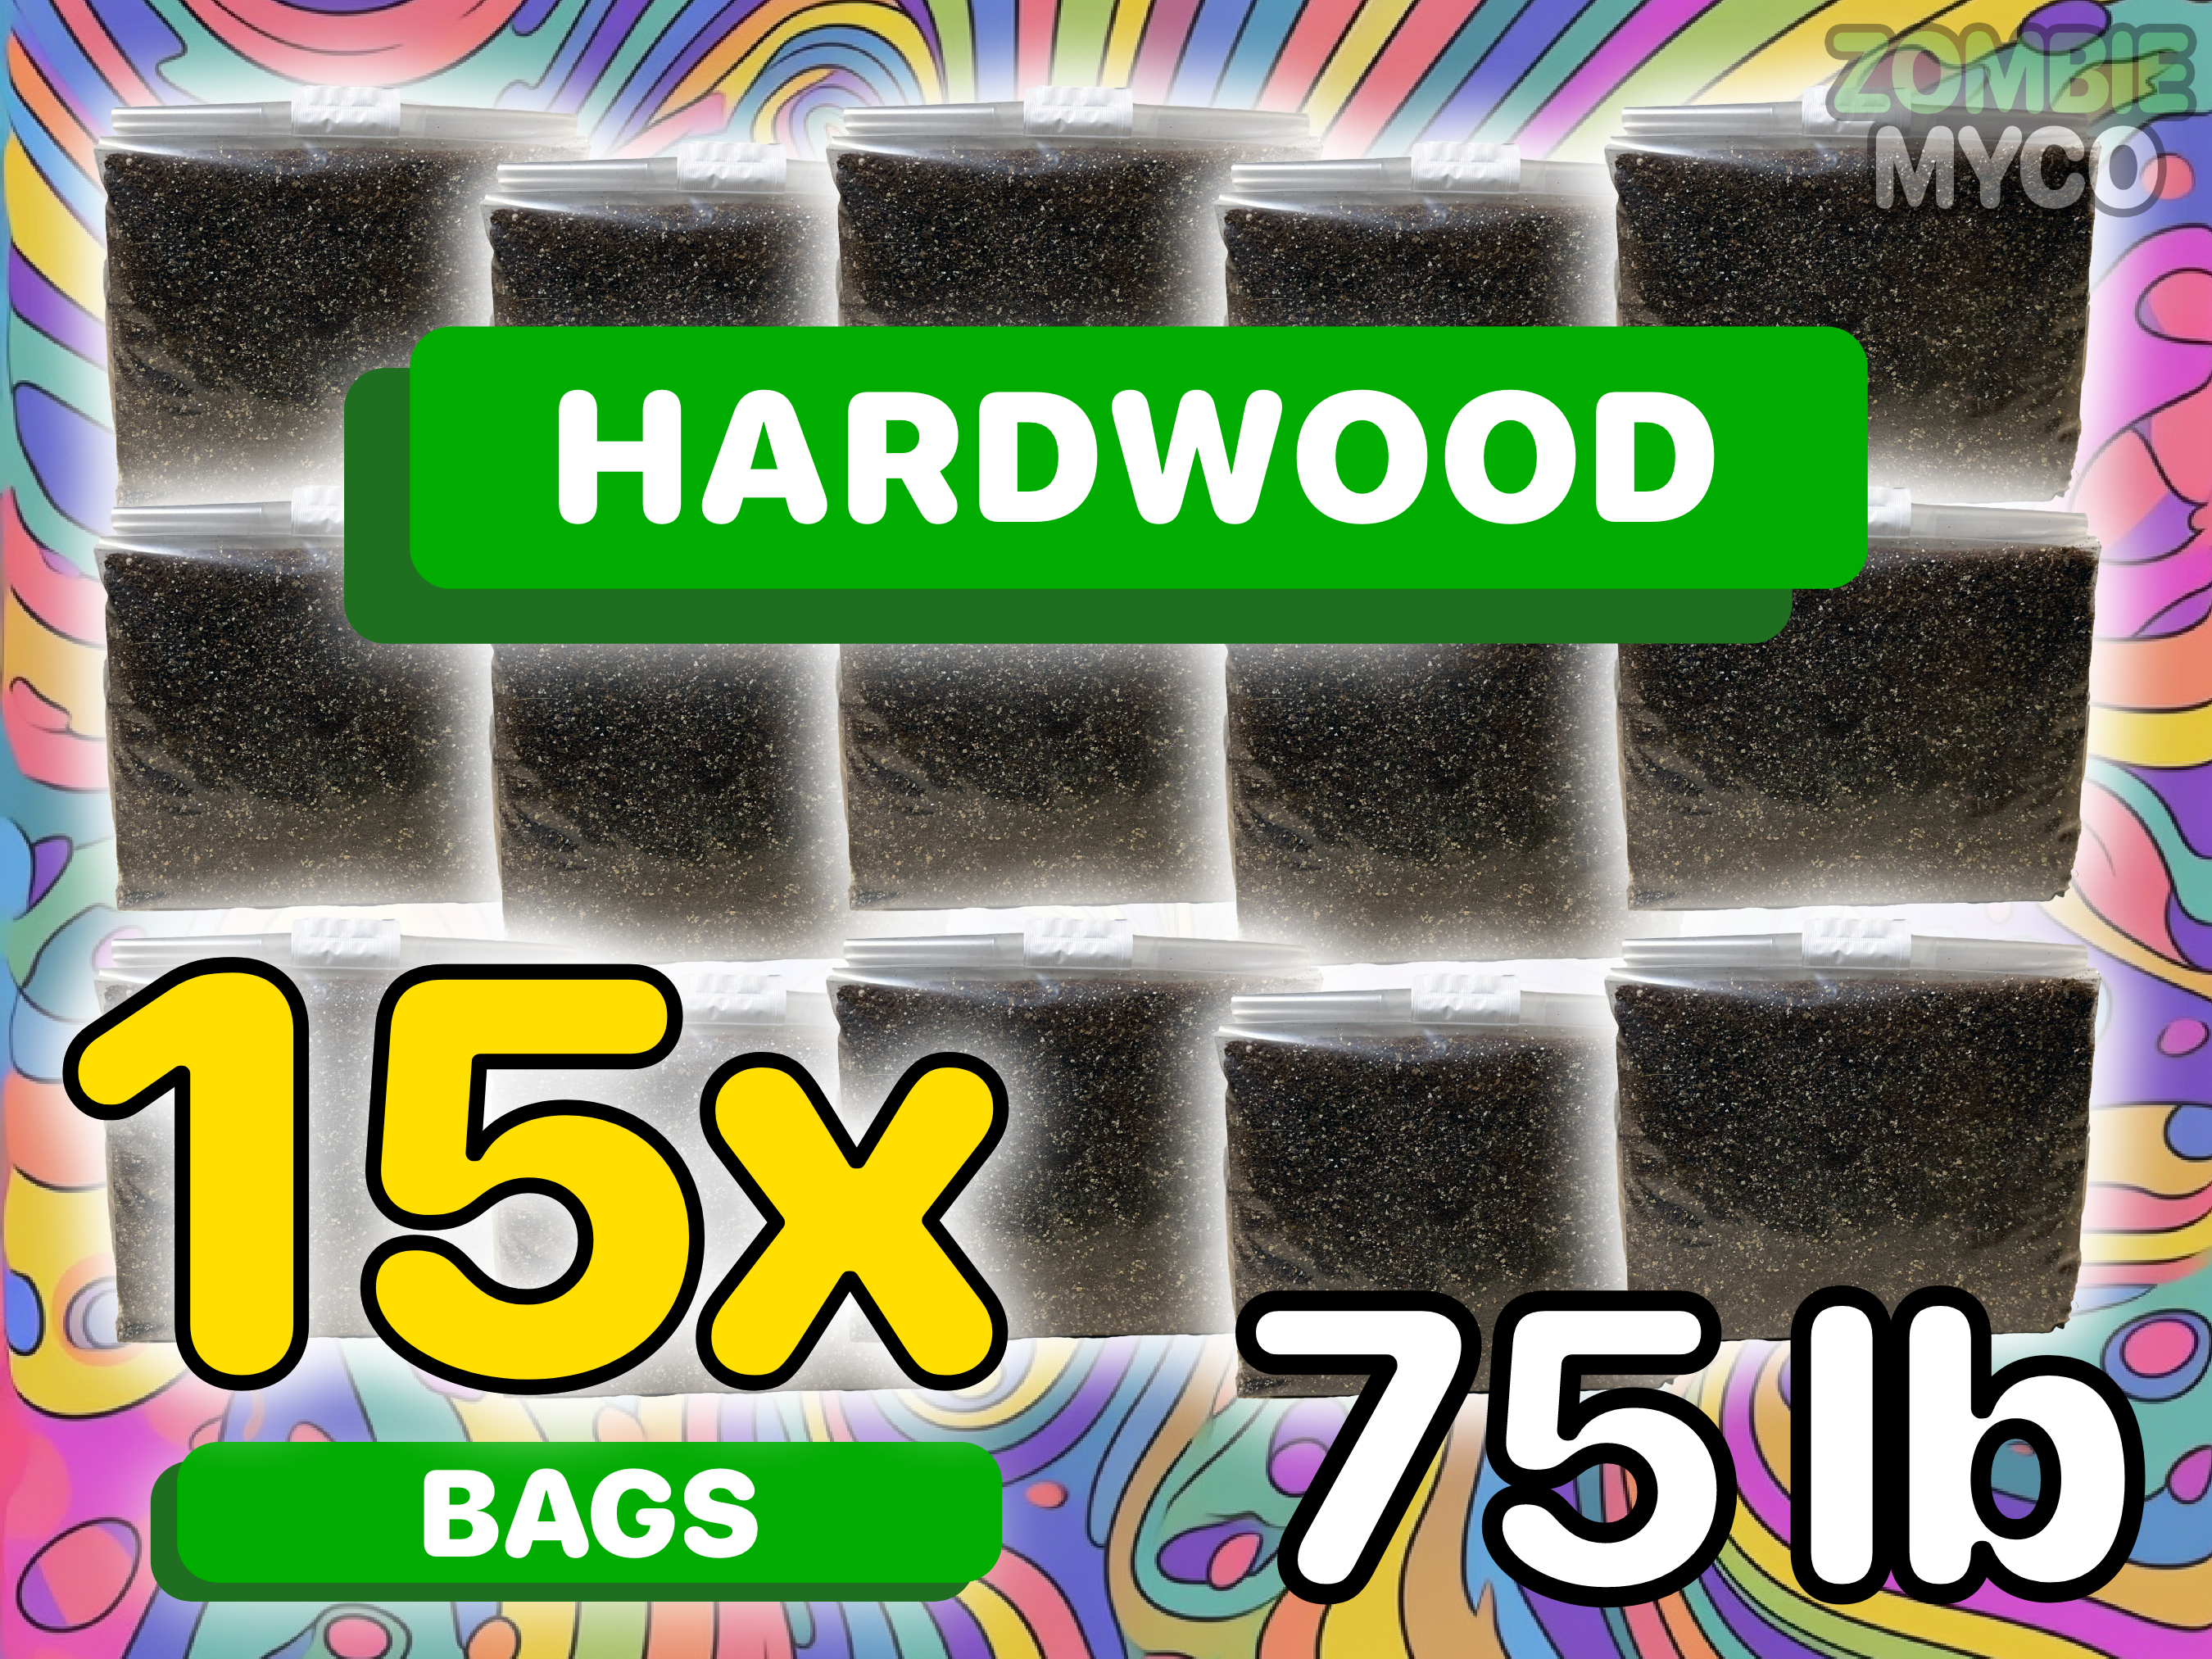 15x bags of Hardwood Sawdust Mushroom Substrate (75lb)